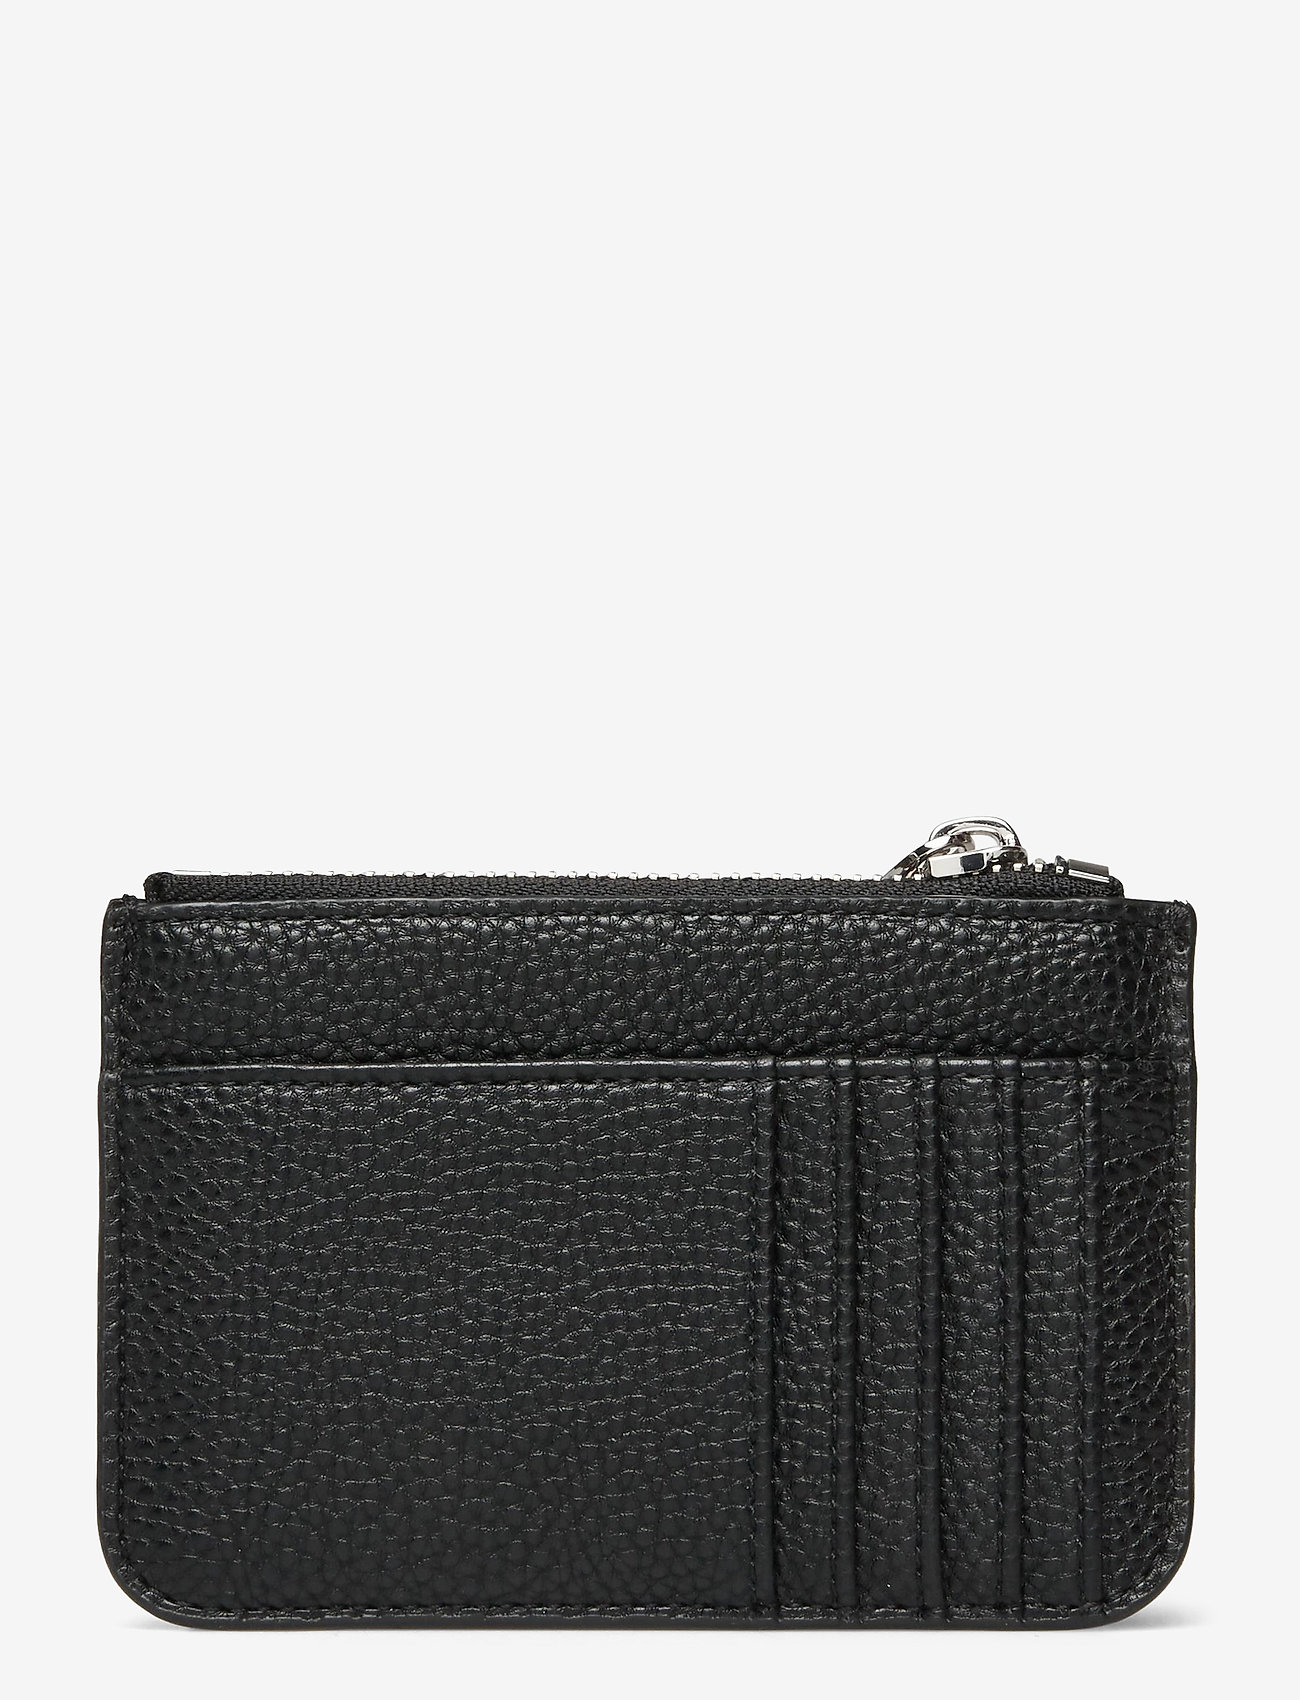 tommy hilfiger small black purse